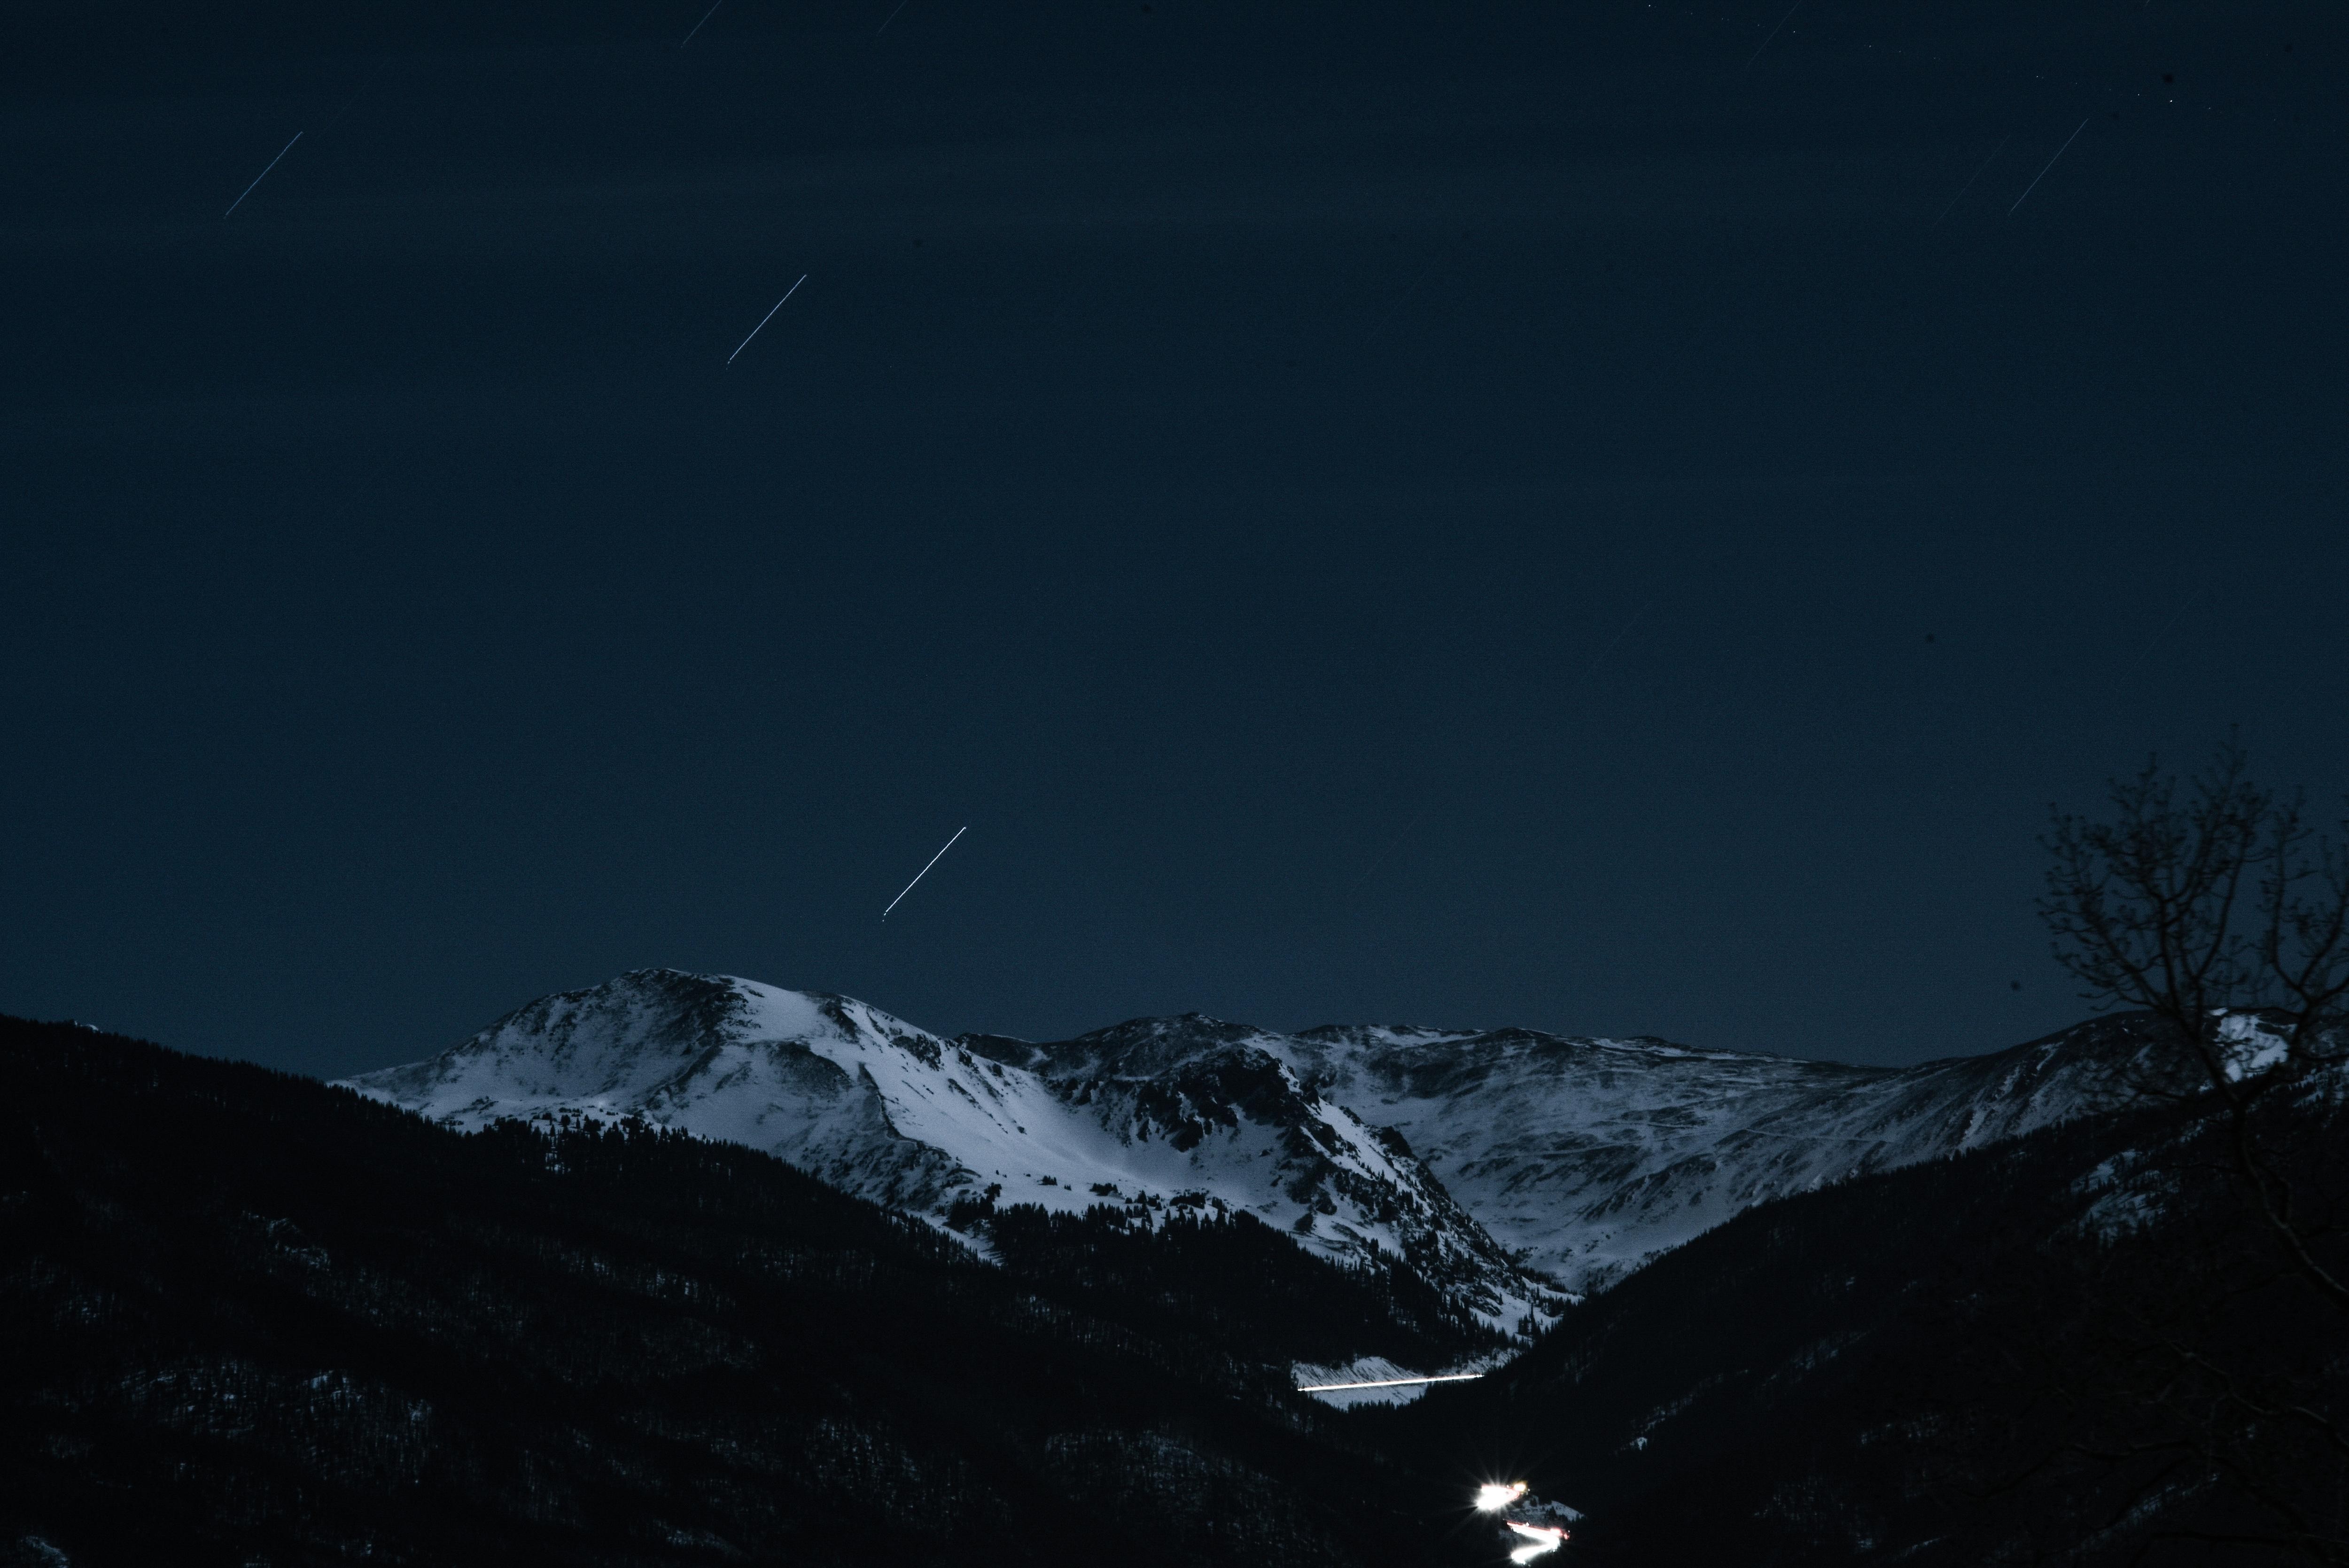 General 5000x3338 mountains snow night night sky stars nature dark landscape long exposure